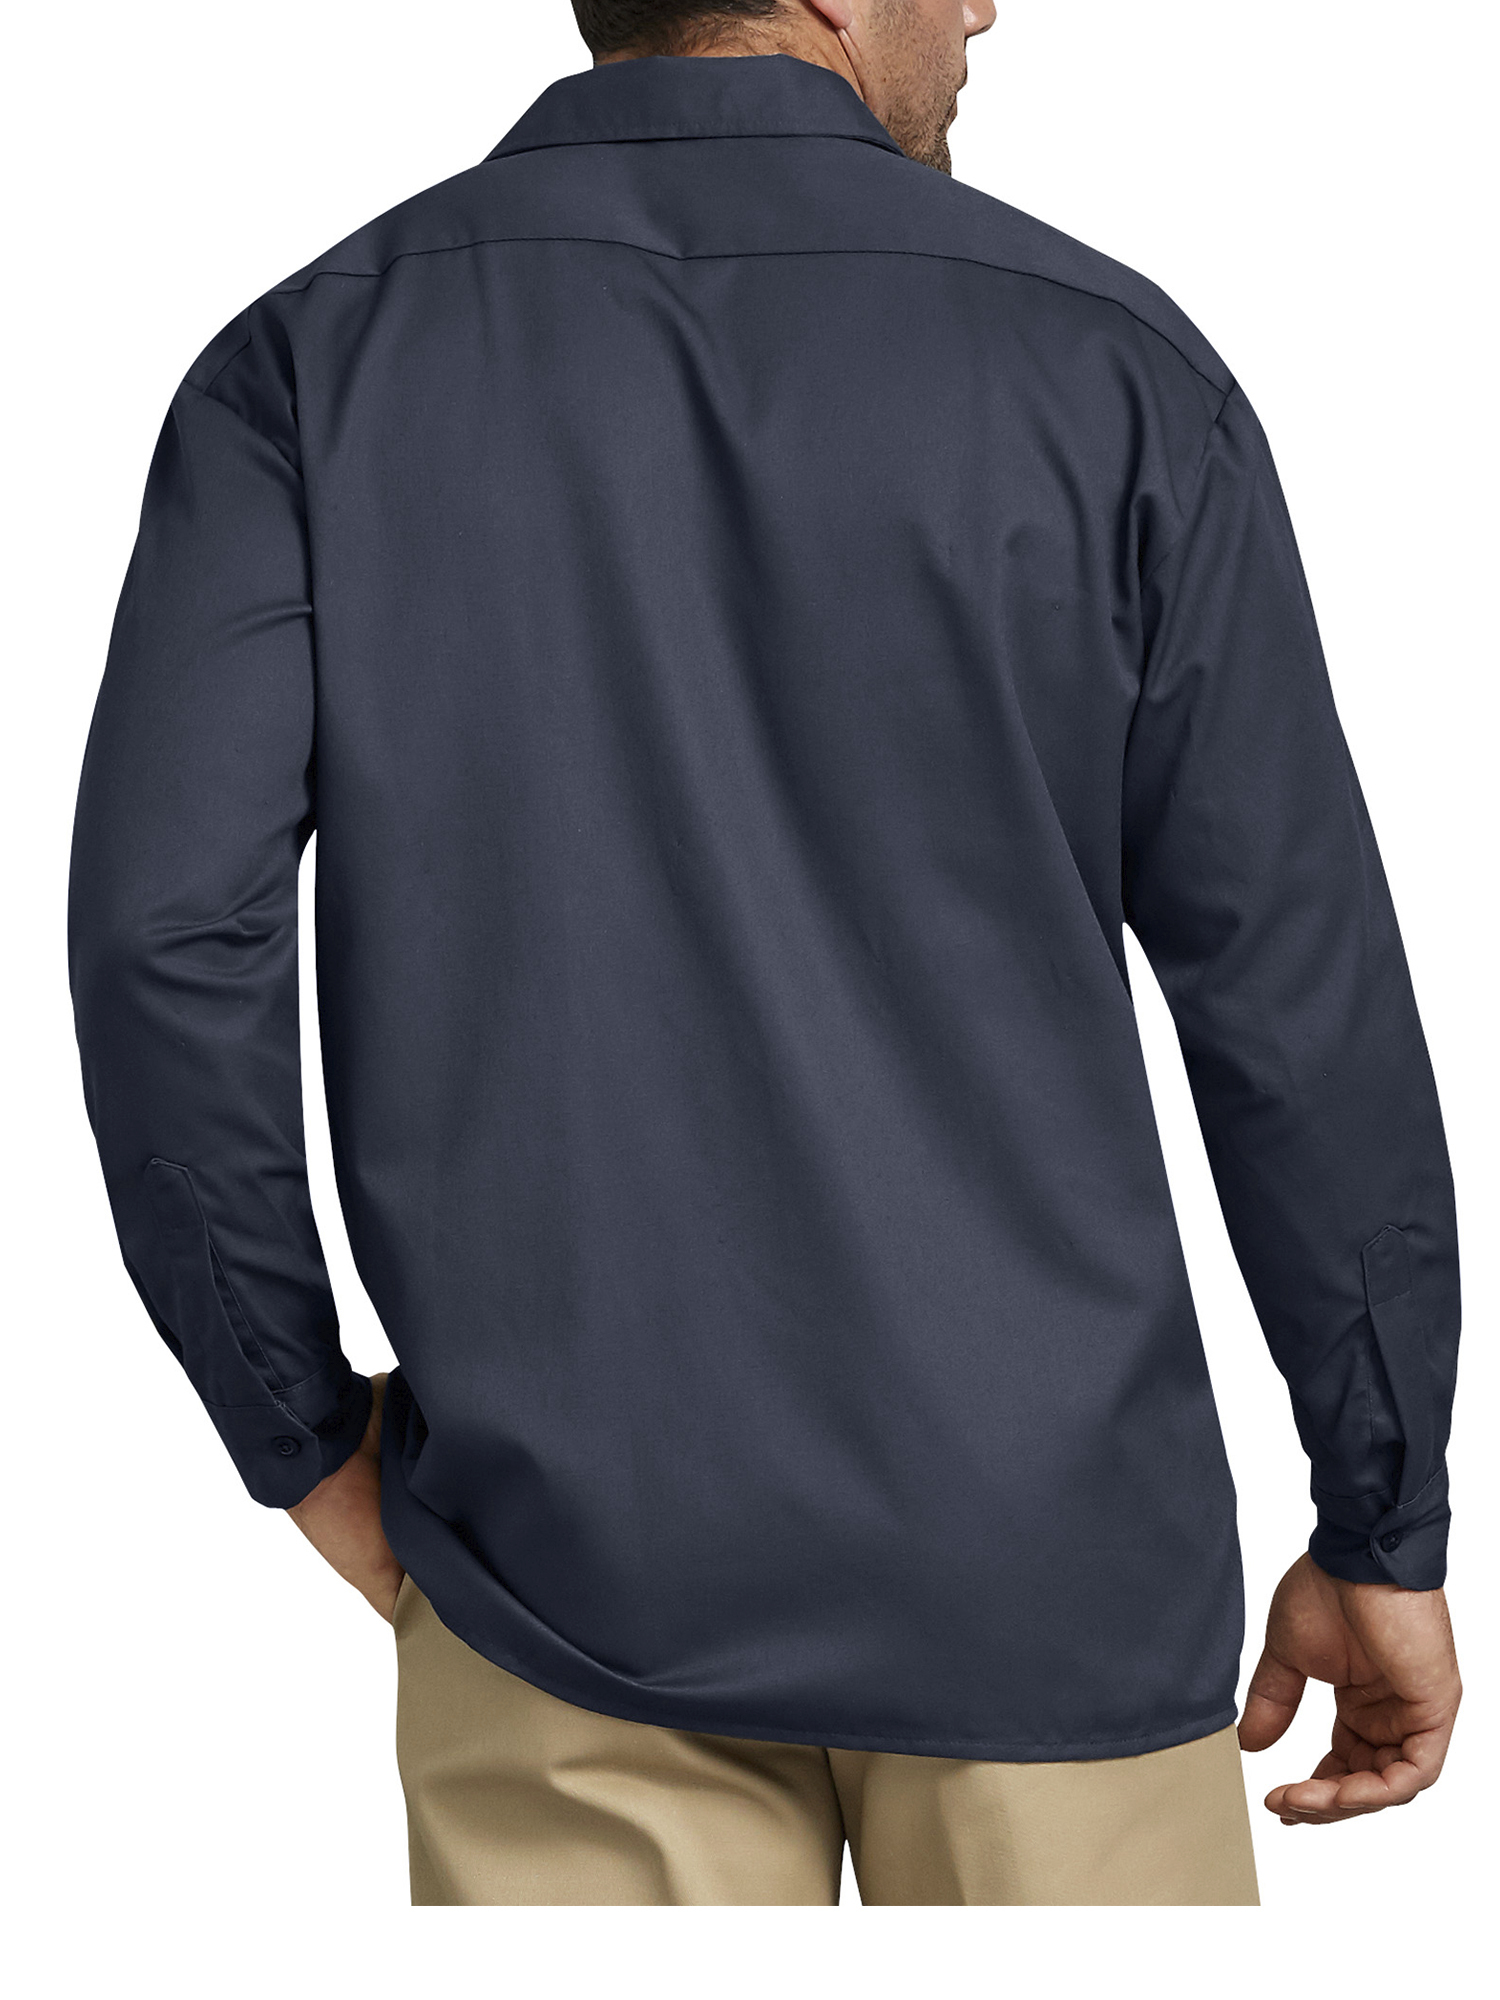 Dickies Mens and Big Men's Original Fit Long Sleeve Twill Work Shirt - image 2 of 2